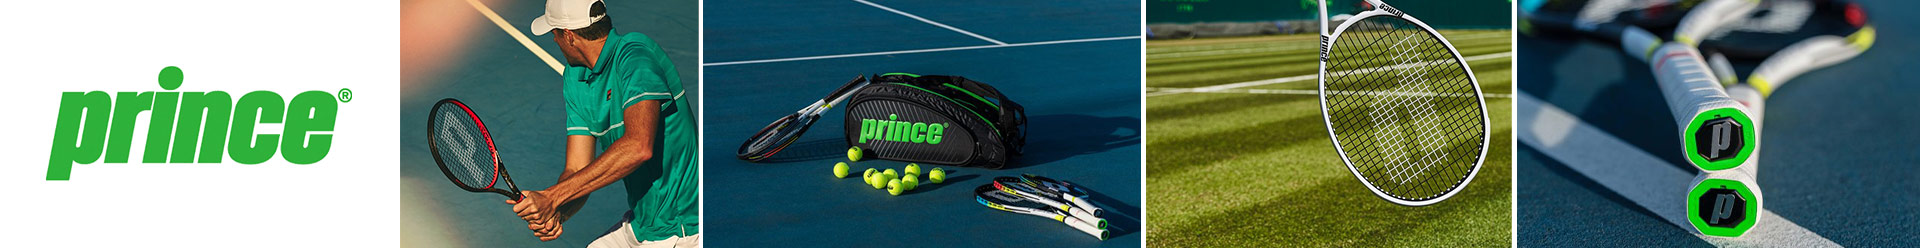 Prince Tennis